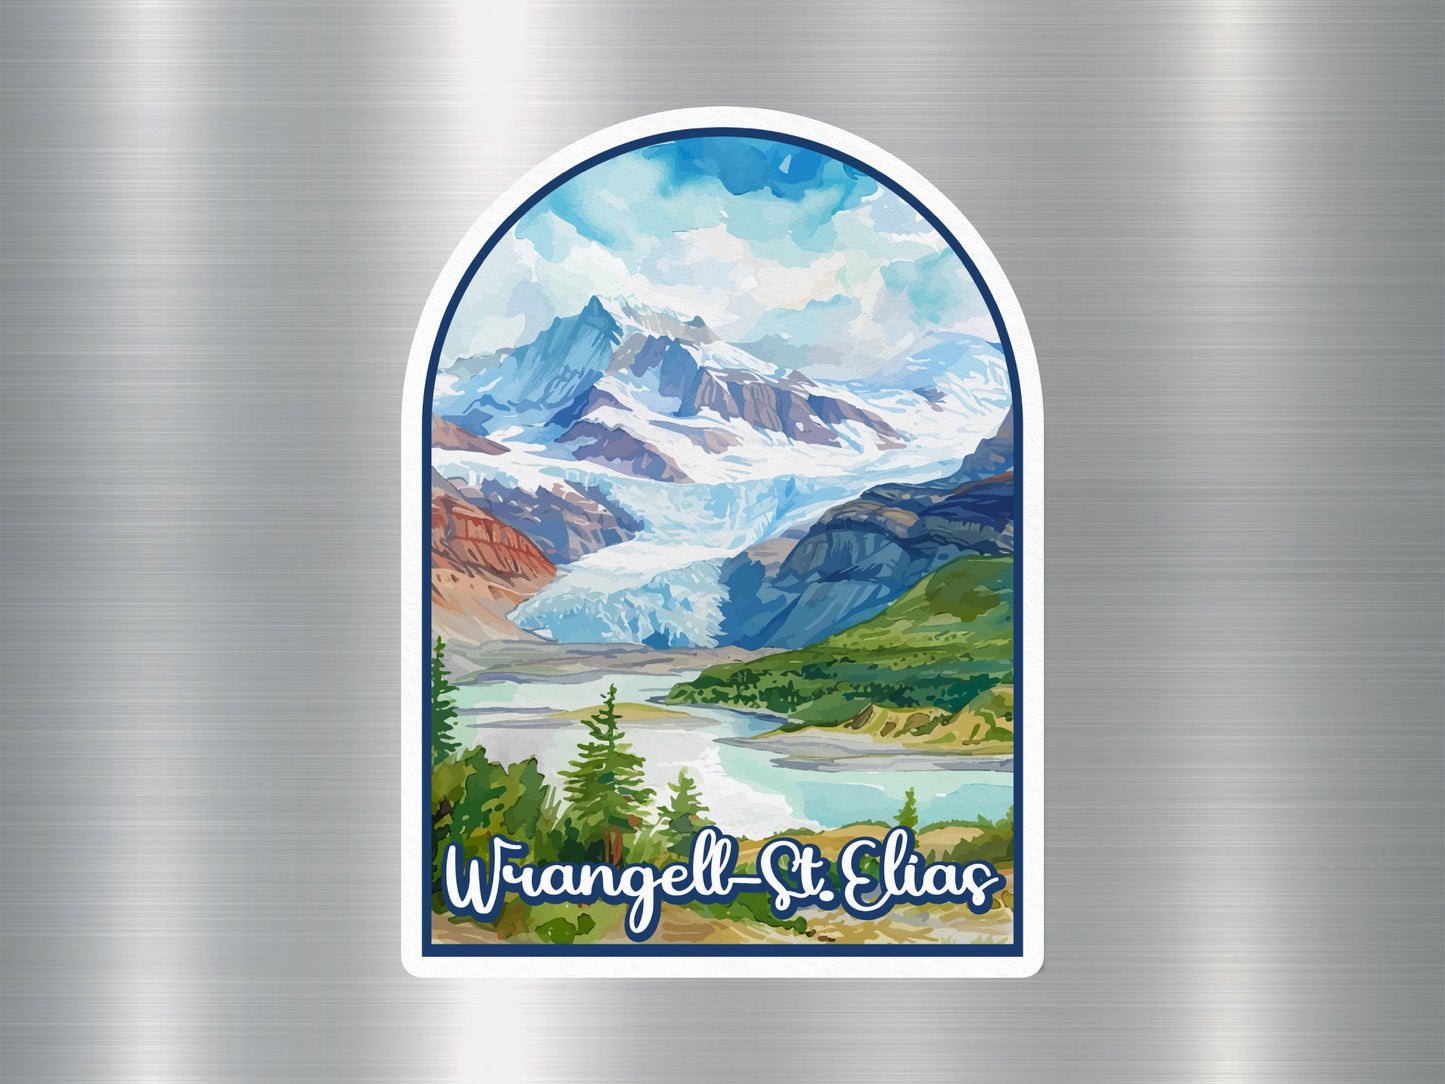 Wrangell-St. Elias National Park Sticker